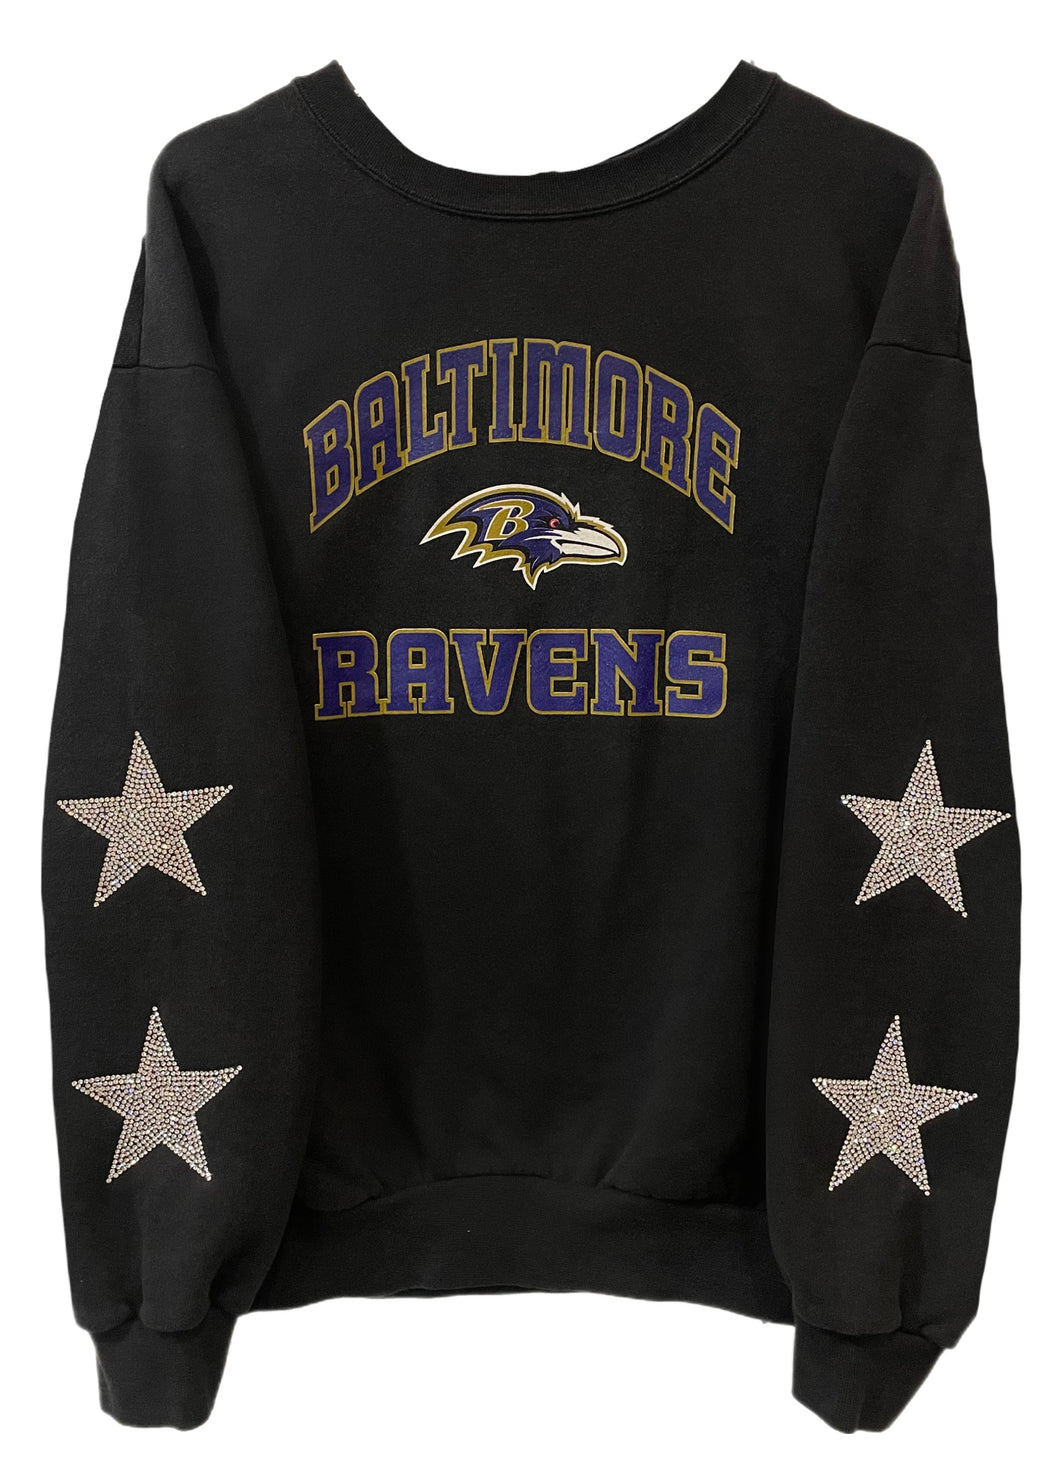 Baltimore Ravens, NFL One of a KIND Vintage Sweatshirt with Crystal Star Design